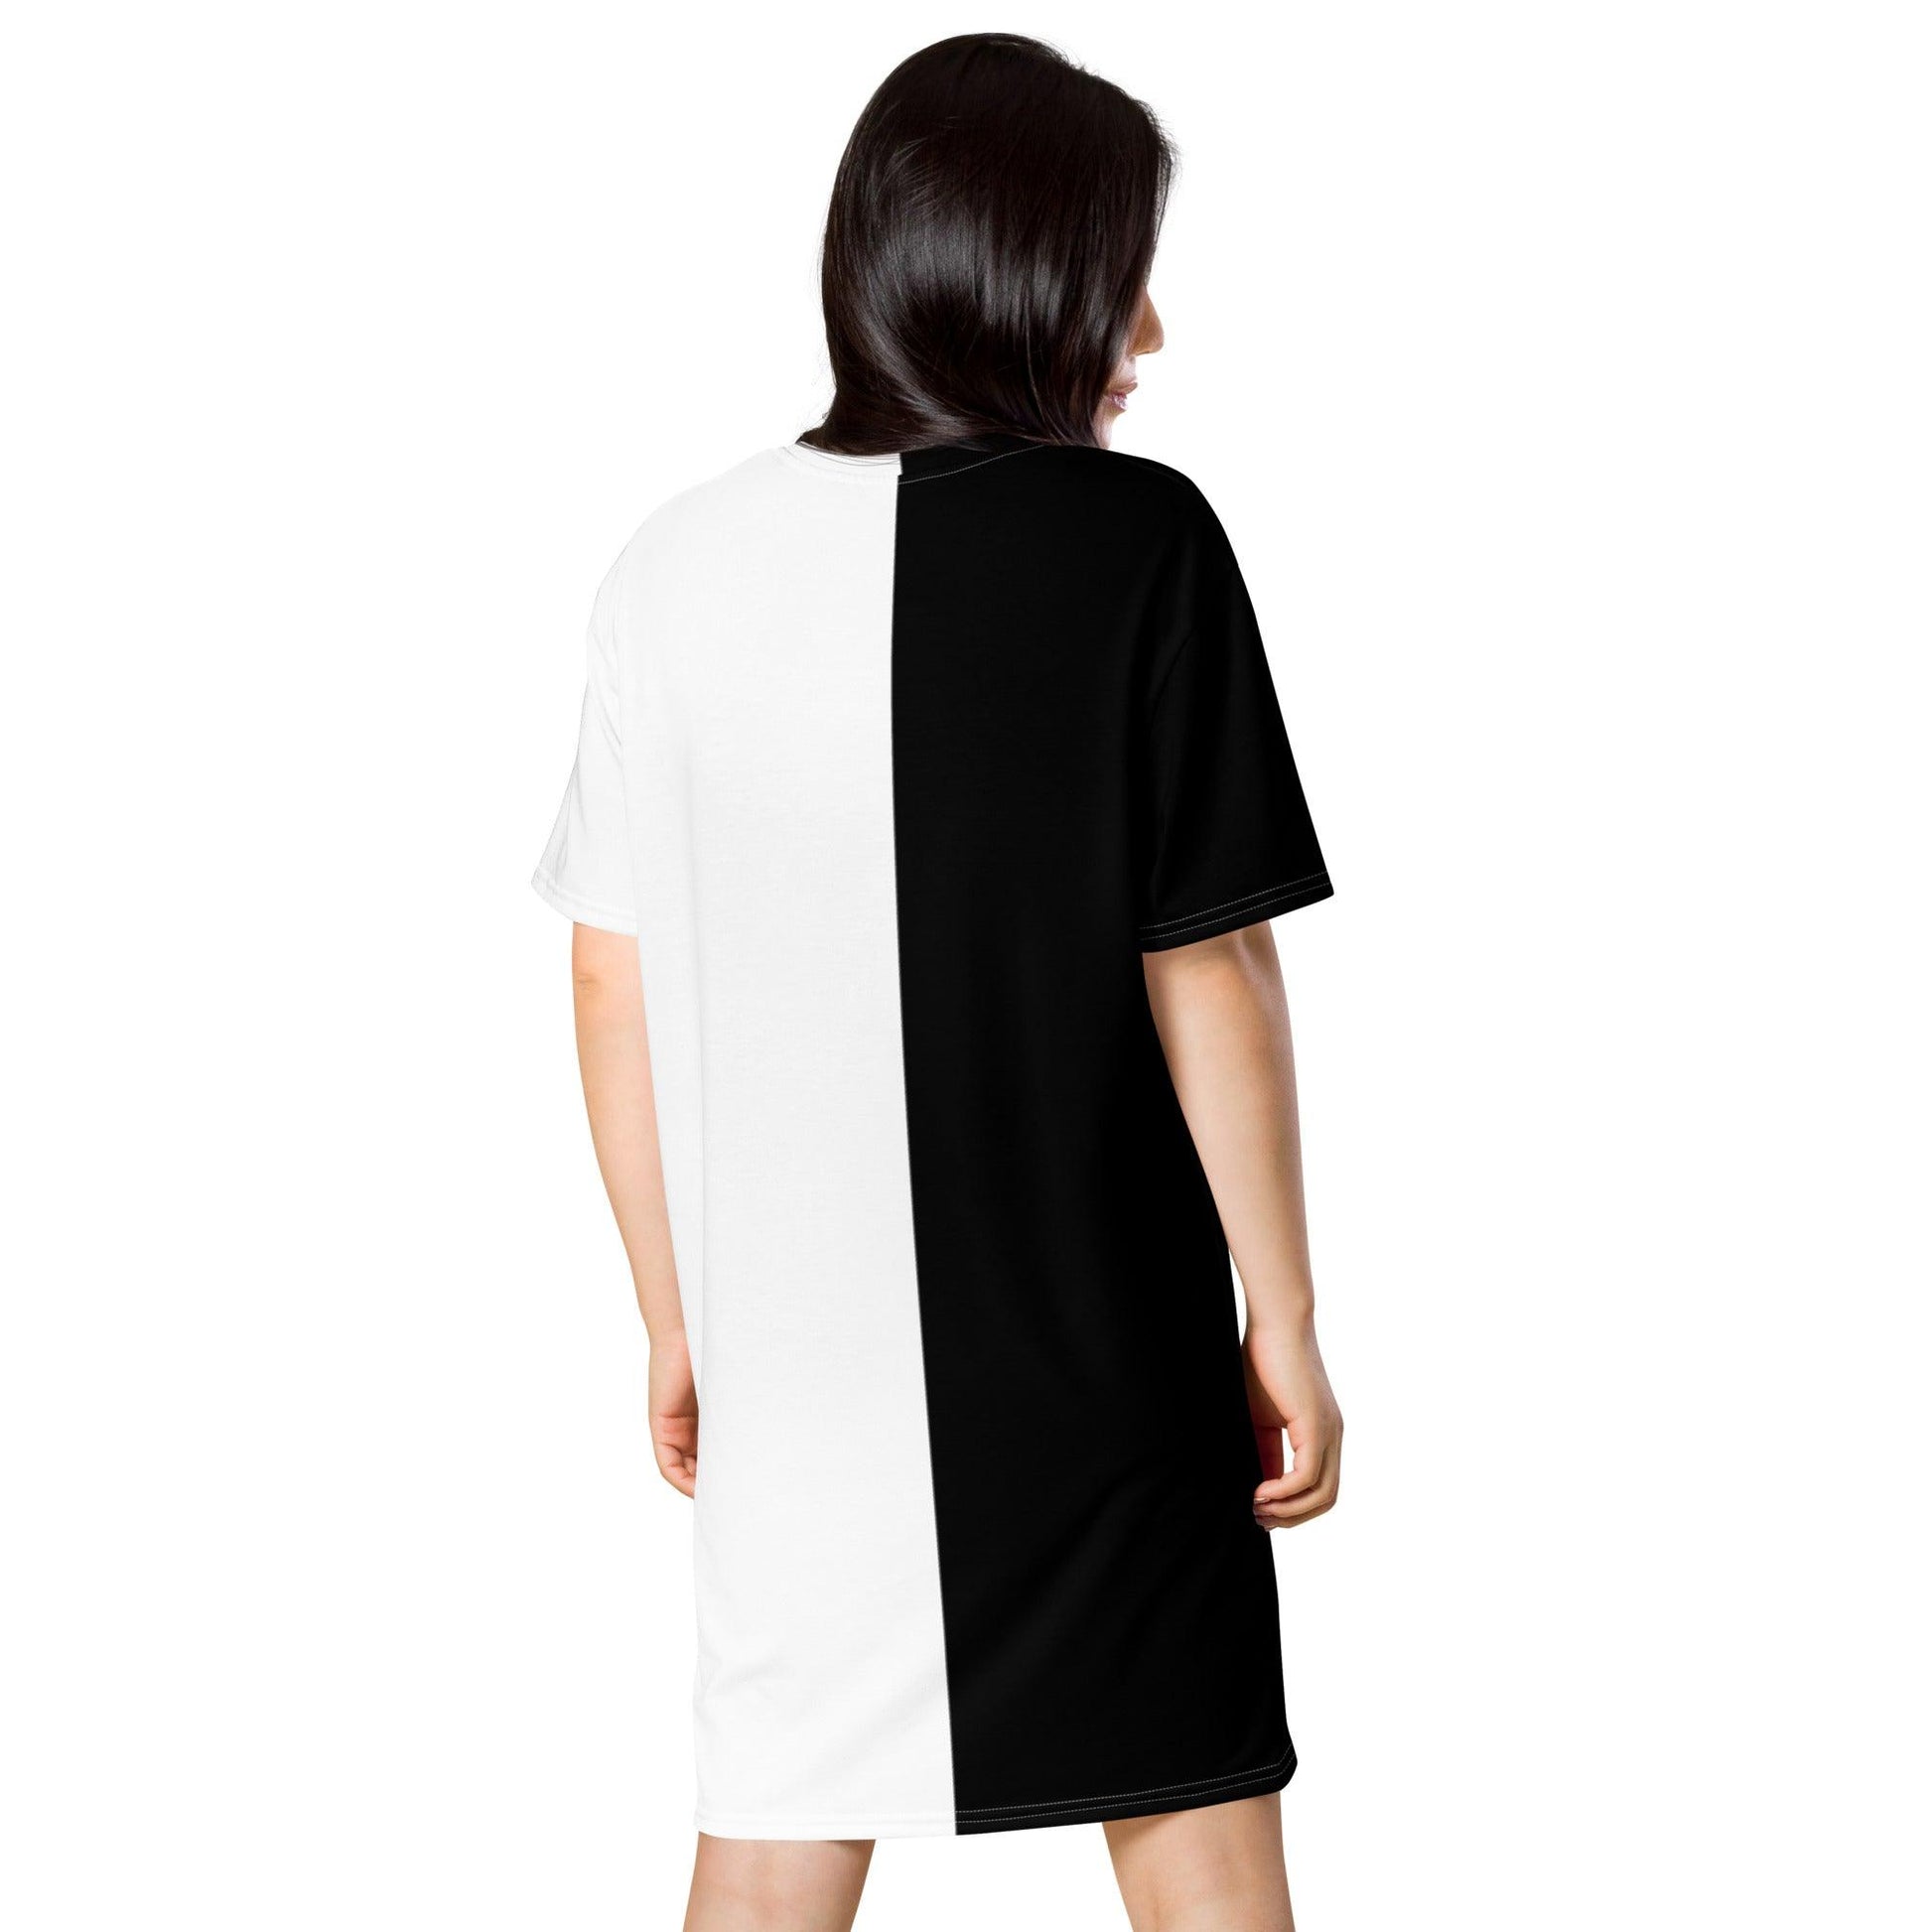 Half Black Half White - Womens T-Shirt Dress - iSAW Company